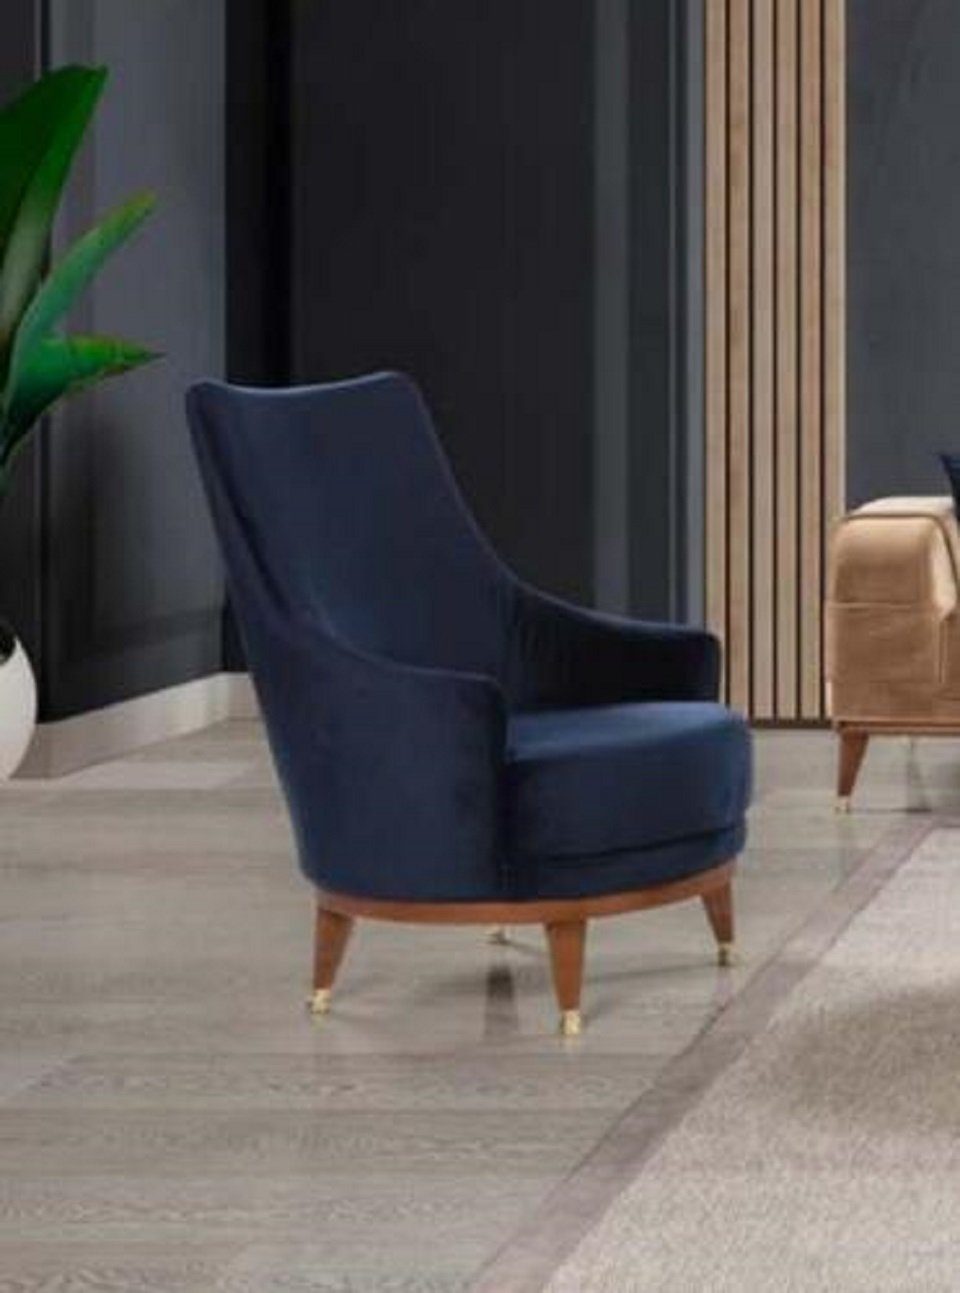 1 in JVmoebel Blau Sessel Neu Sessel Sitz Luxus Design Made Sitz Polster Sitz Einsitzer (Sessel), Europe Stoff